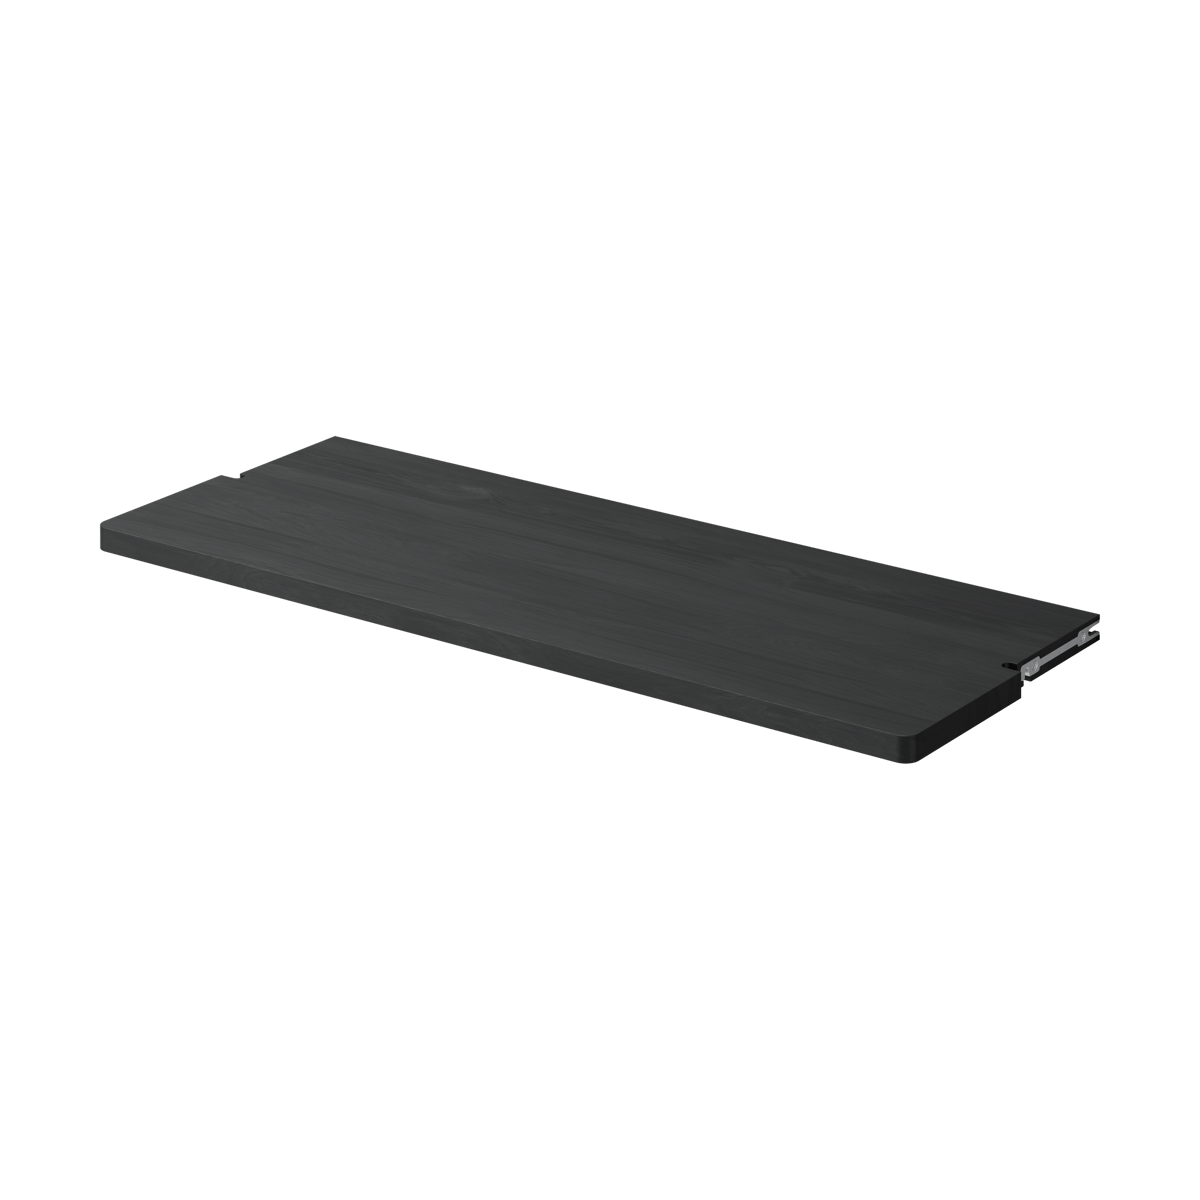 Massproductions Gridlock Deep Shelf W800 plank Black stained Ash